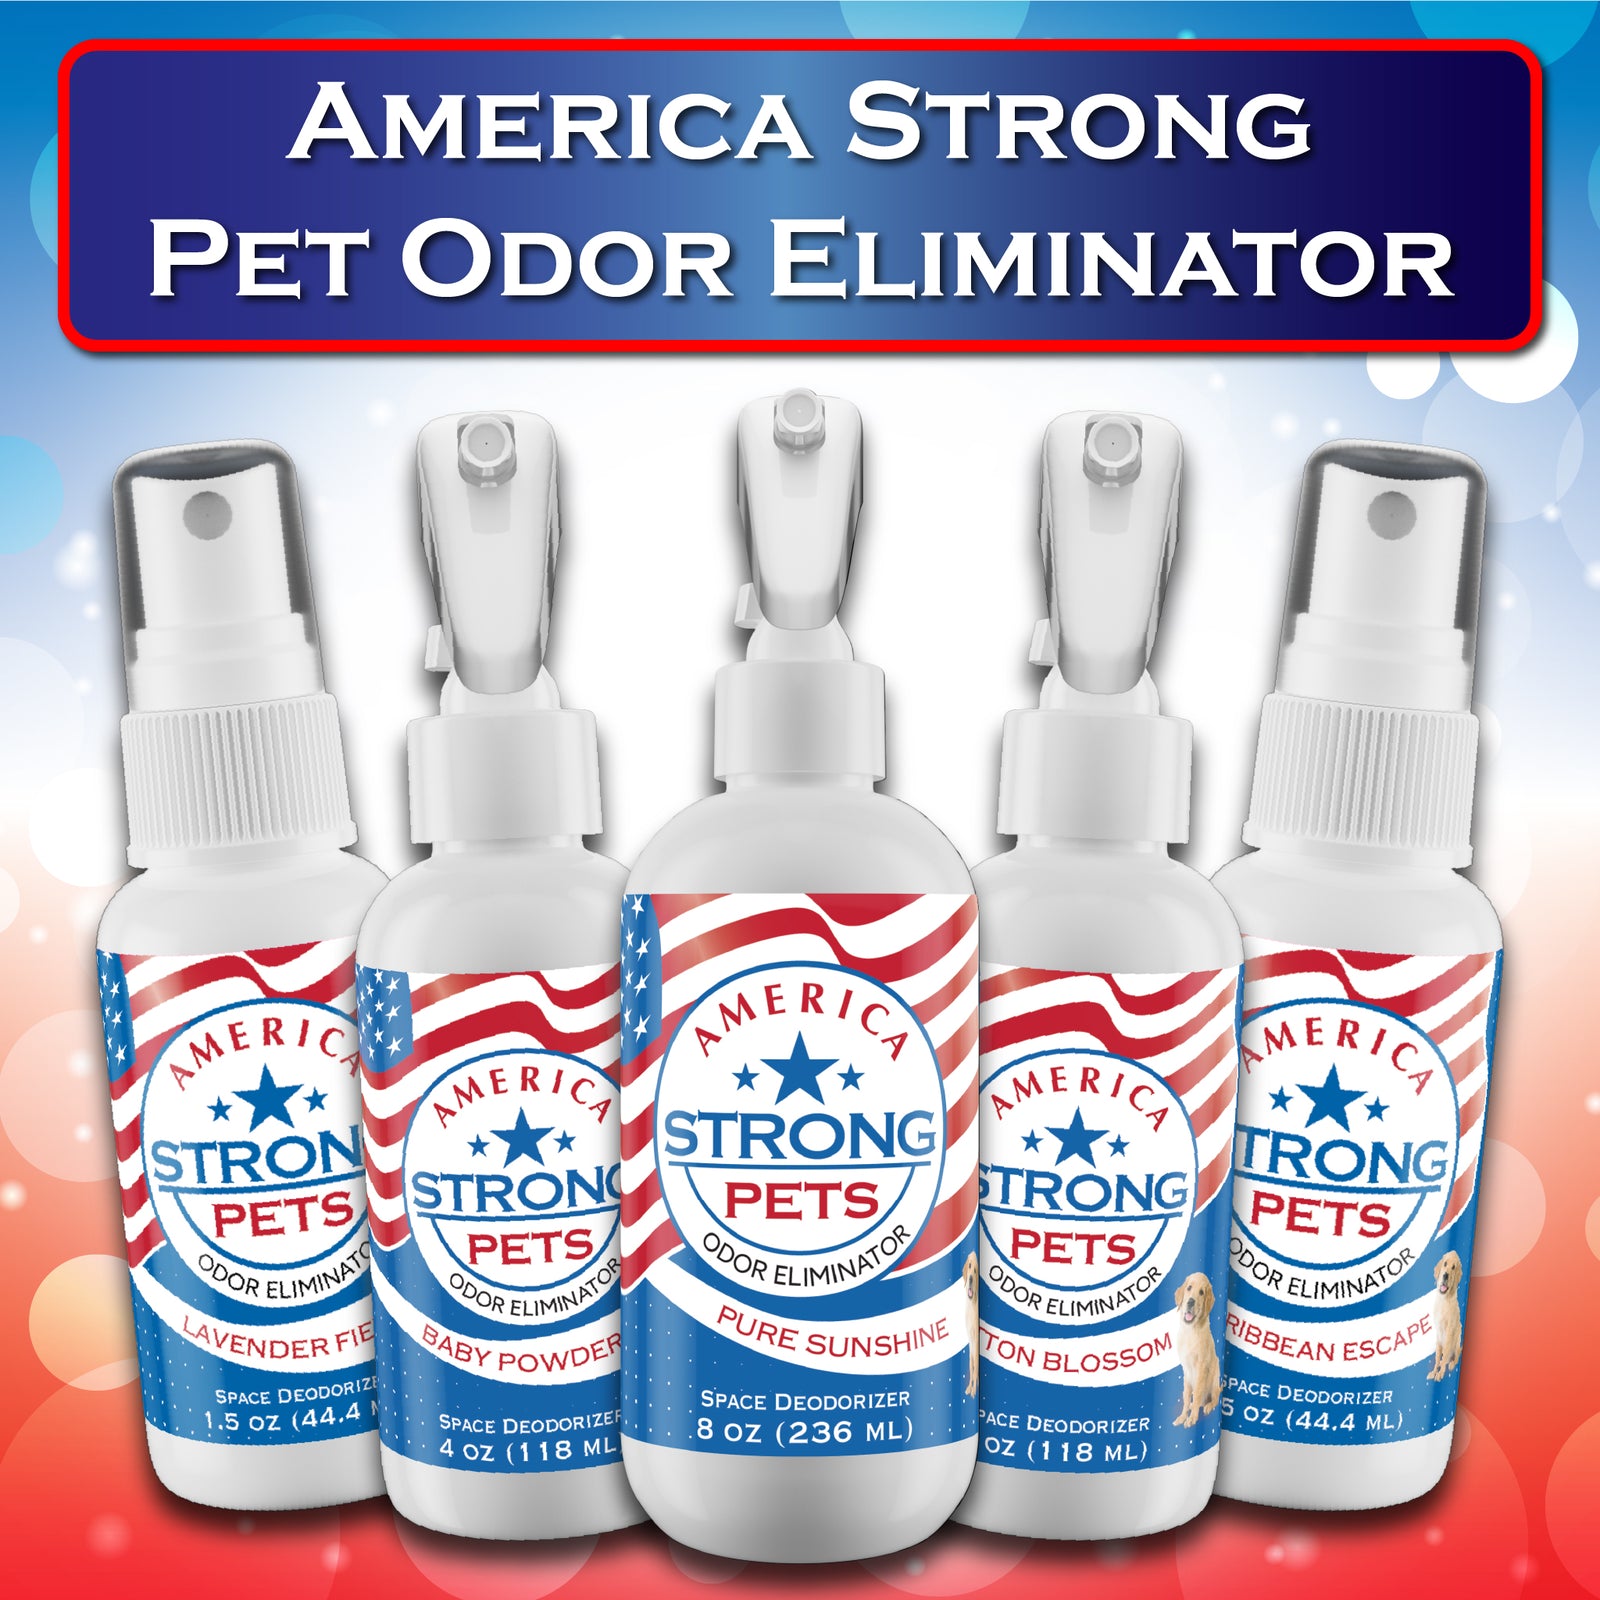 America Strong Pet Odor Eliminators